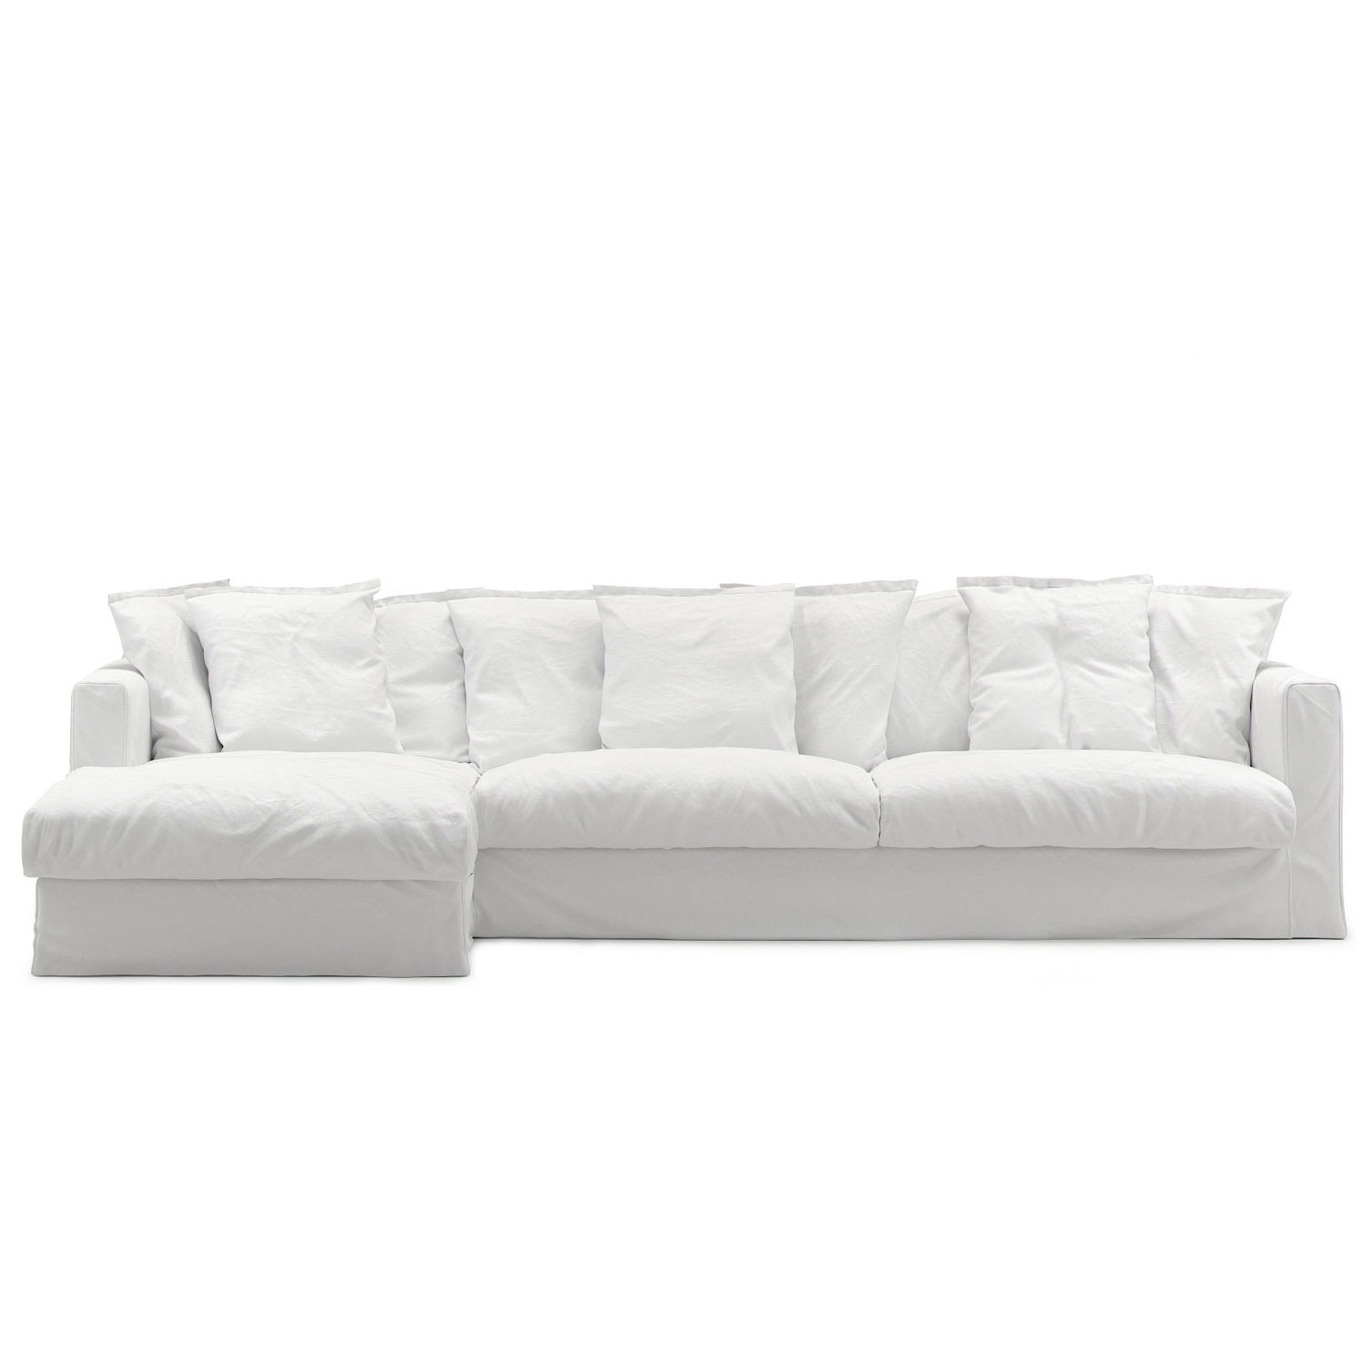 Le Grand Air Upholstery 3-Seater Divan Left, White